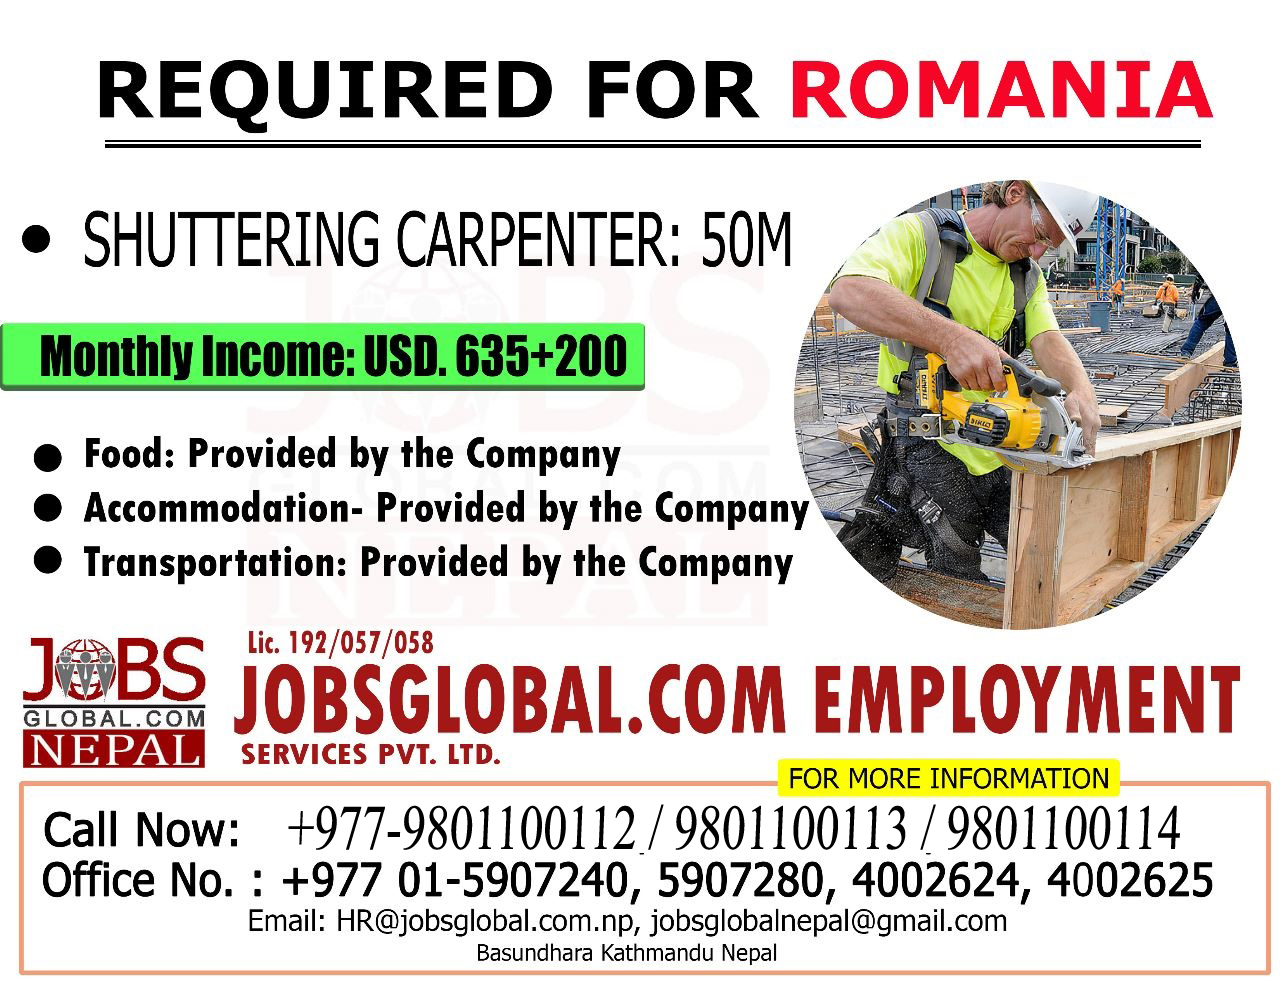 Jobs Global.com Emploment - Romania Requirements-:Shuttering Carpenter